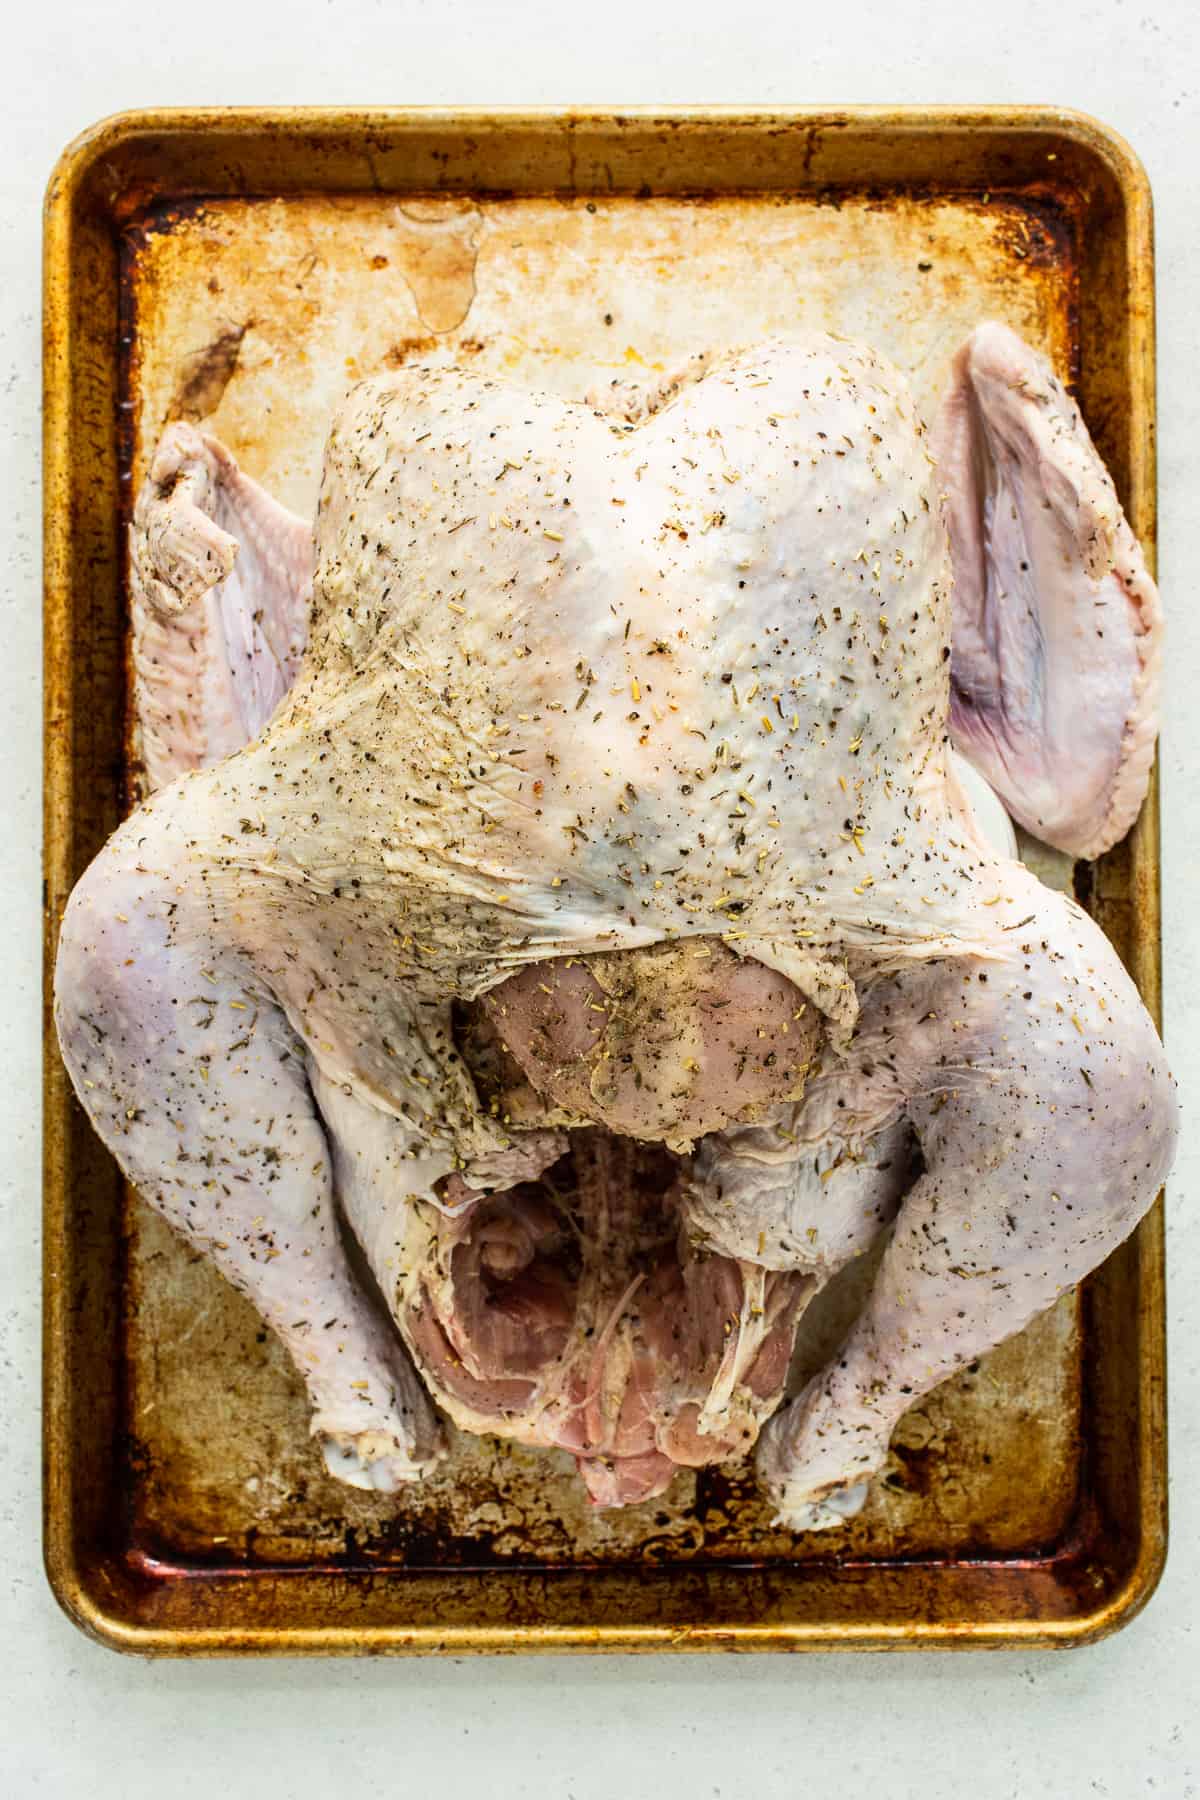 uncooked turkey on baking sheet.